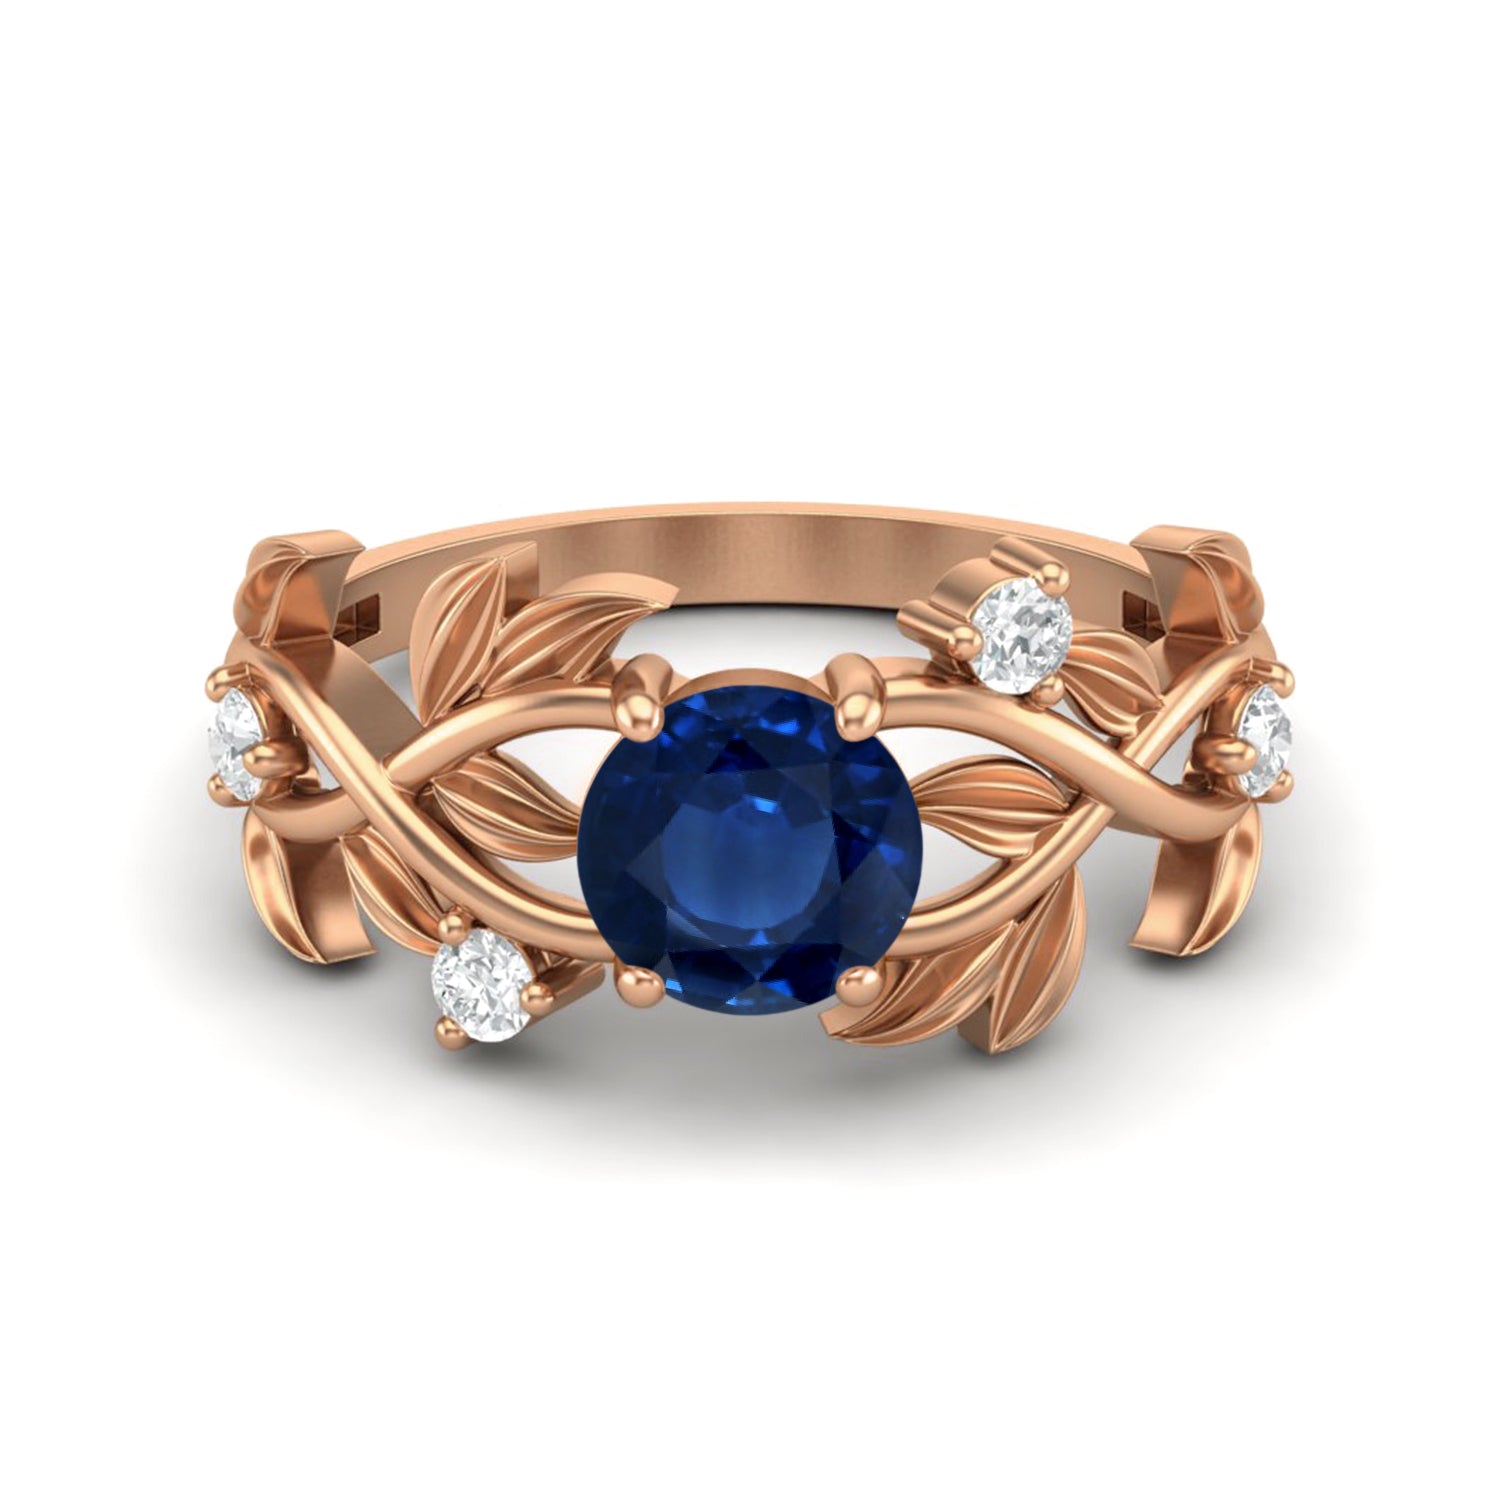 Blue Sapphire Engagement Rings | Rêve Diamonds